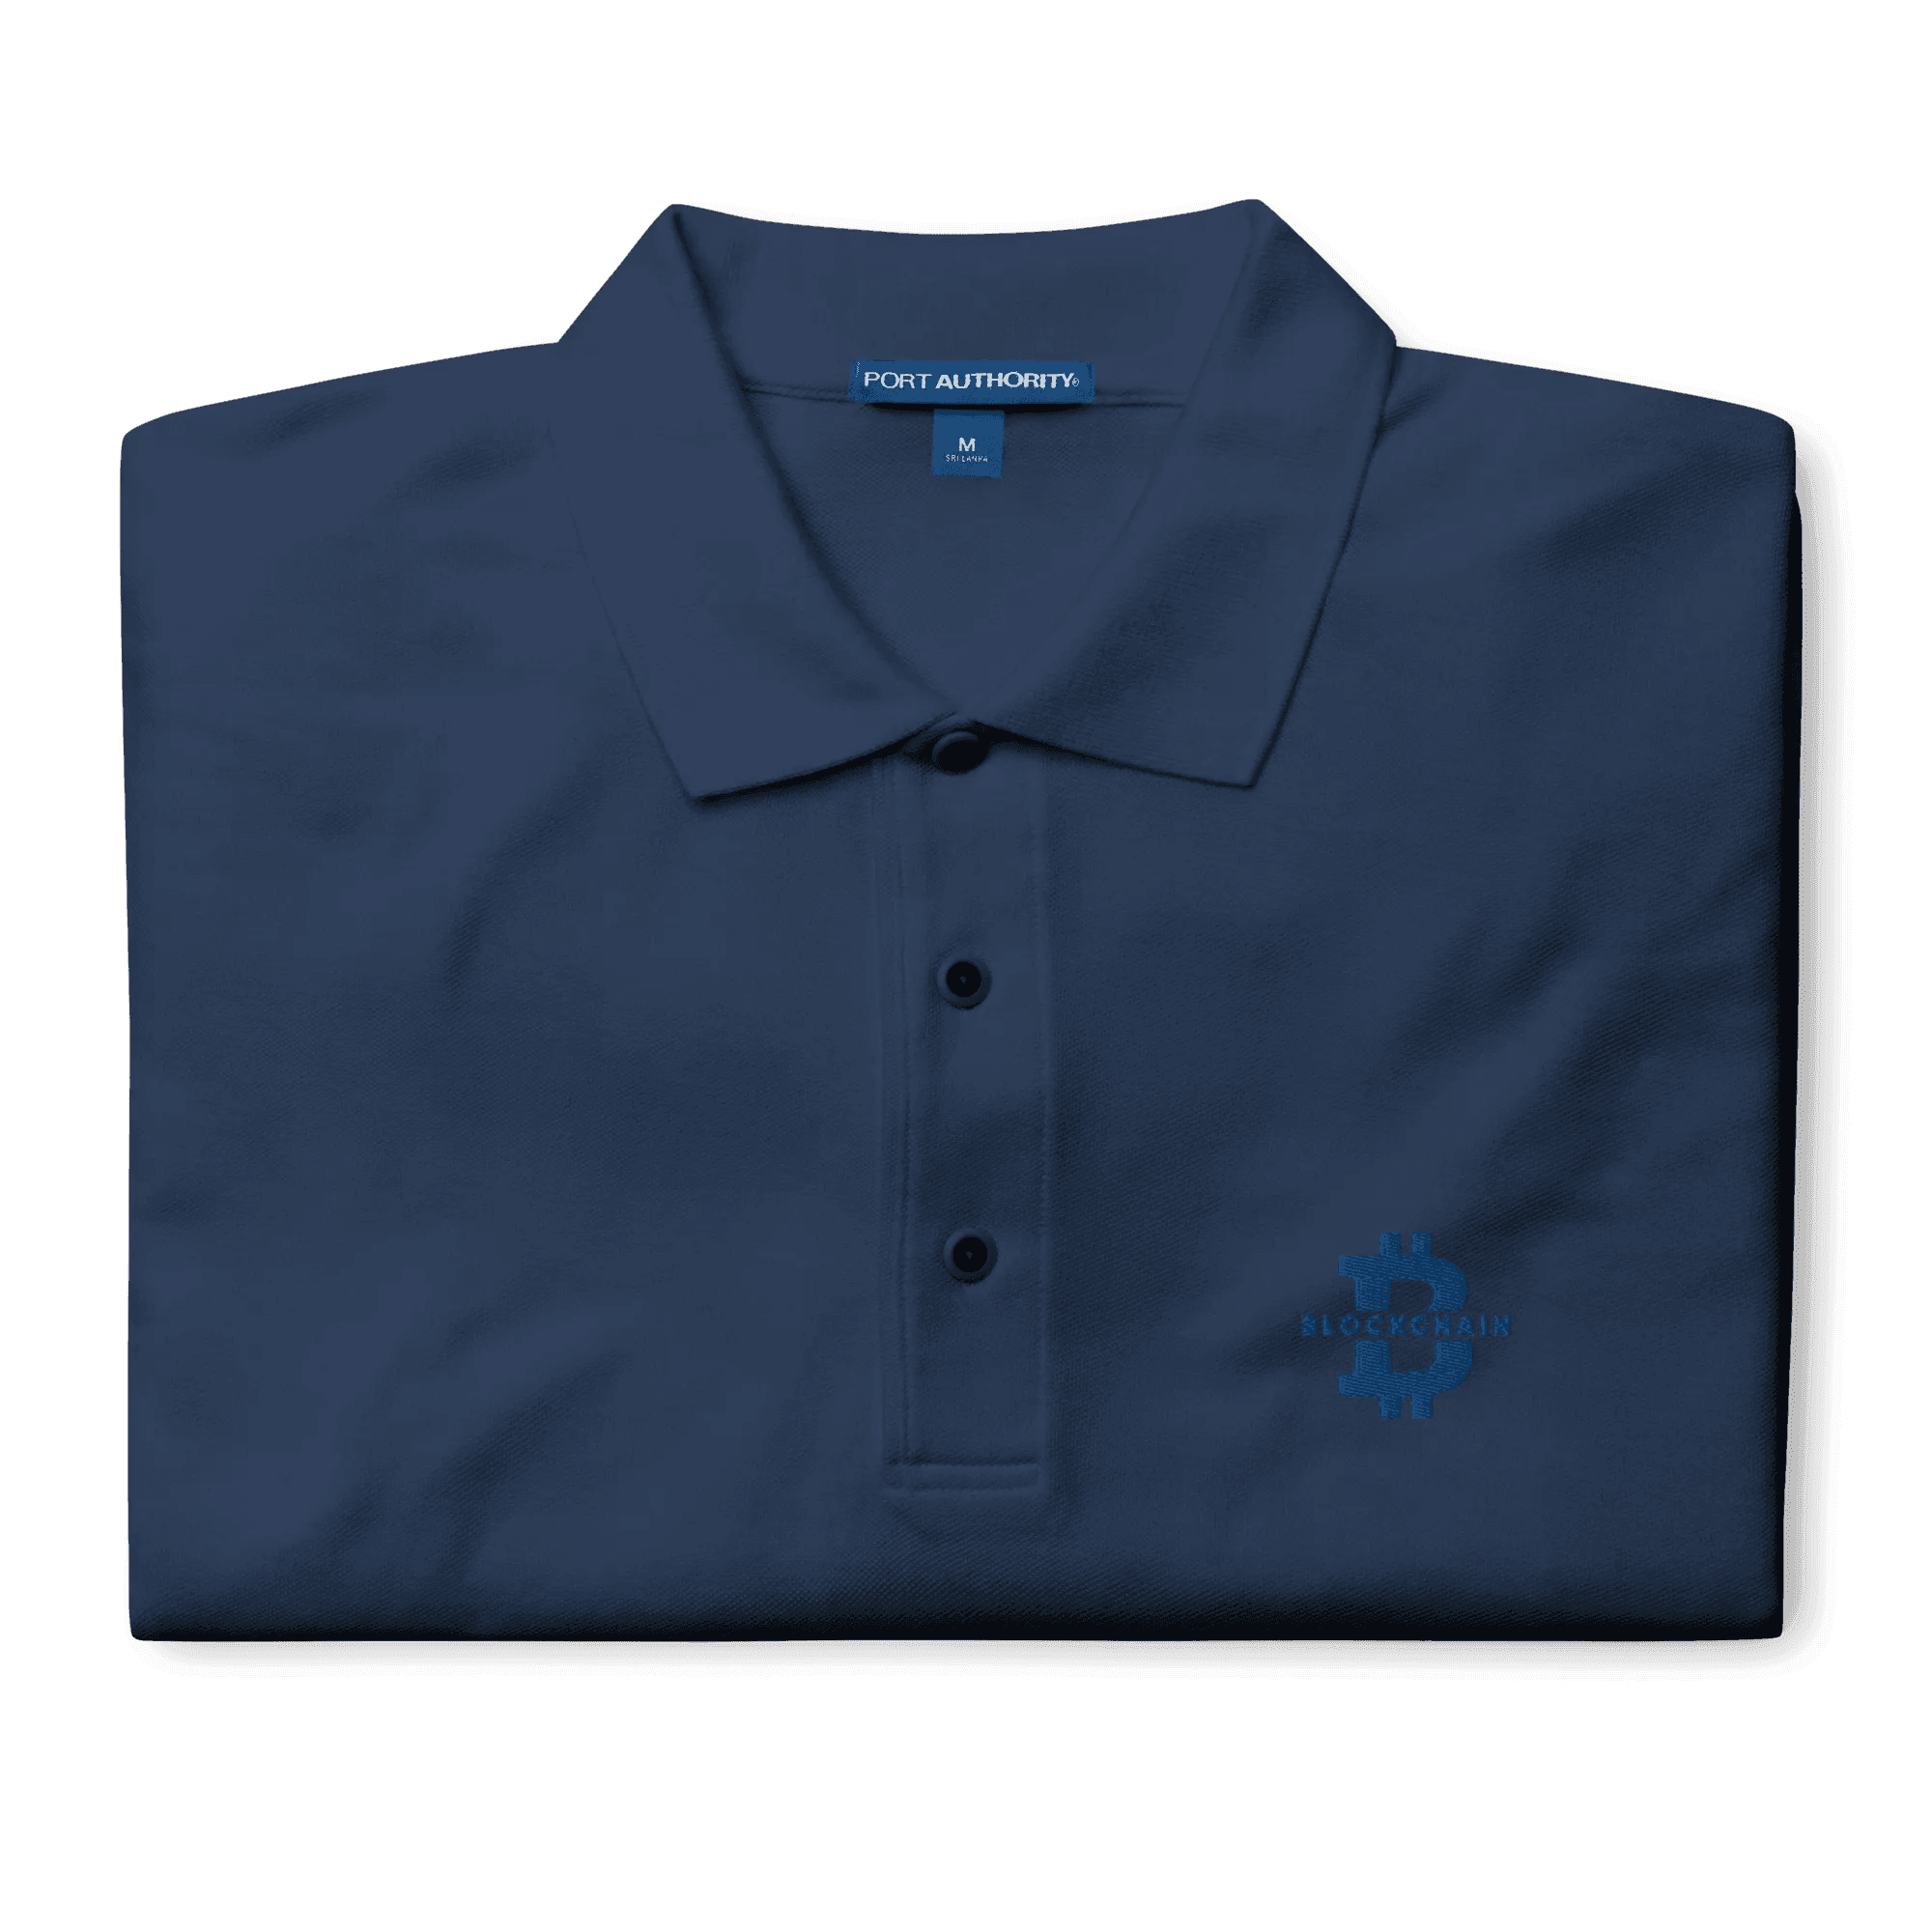 BlockChain Polo Shirt - InvestmenTees